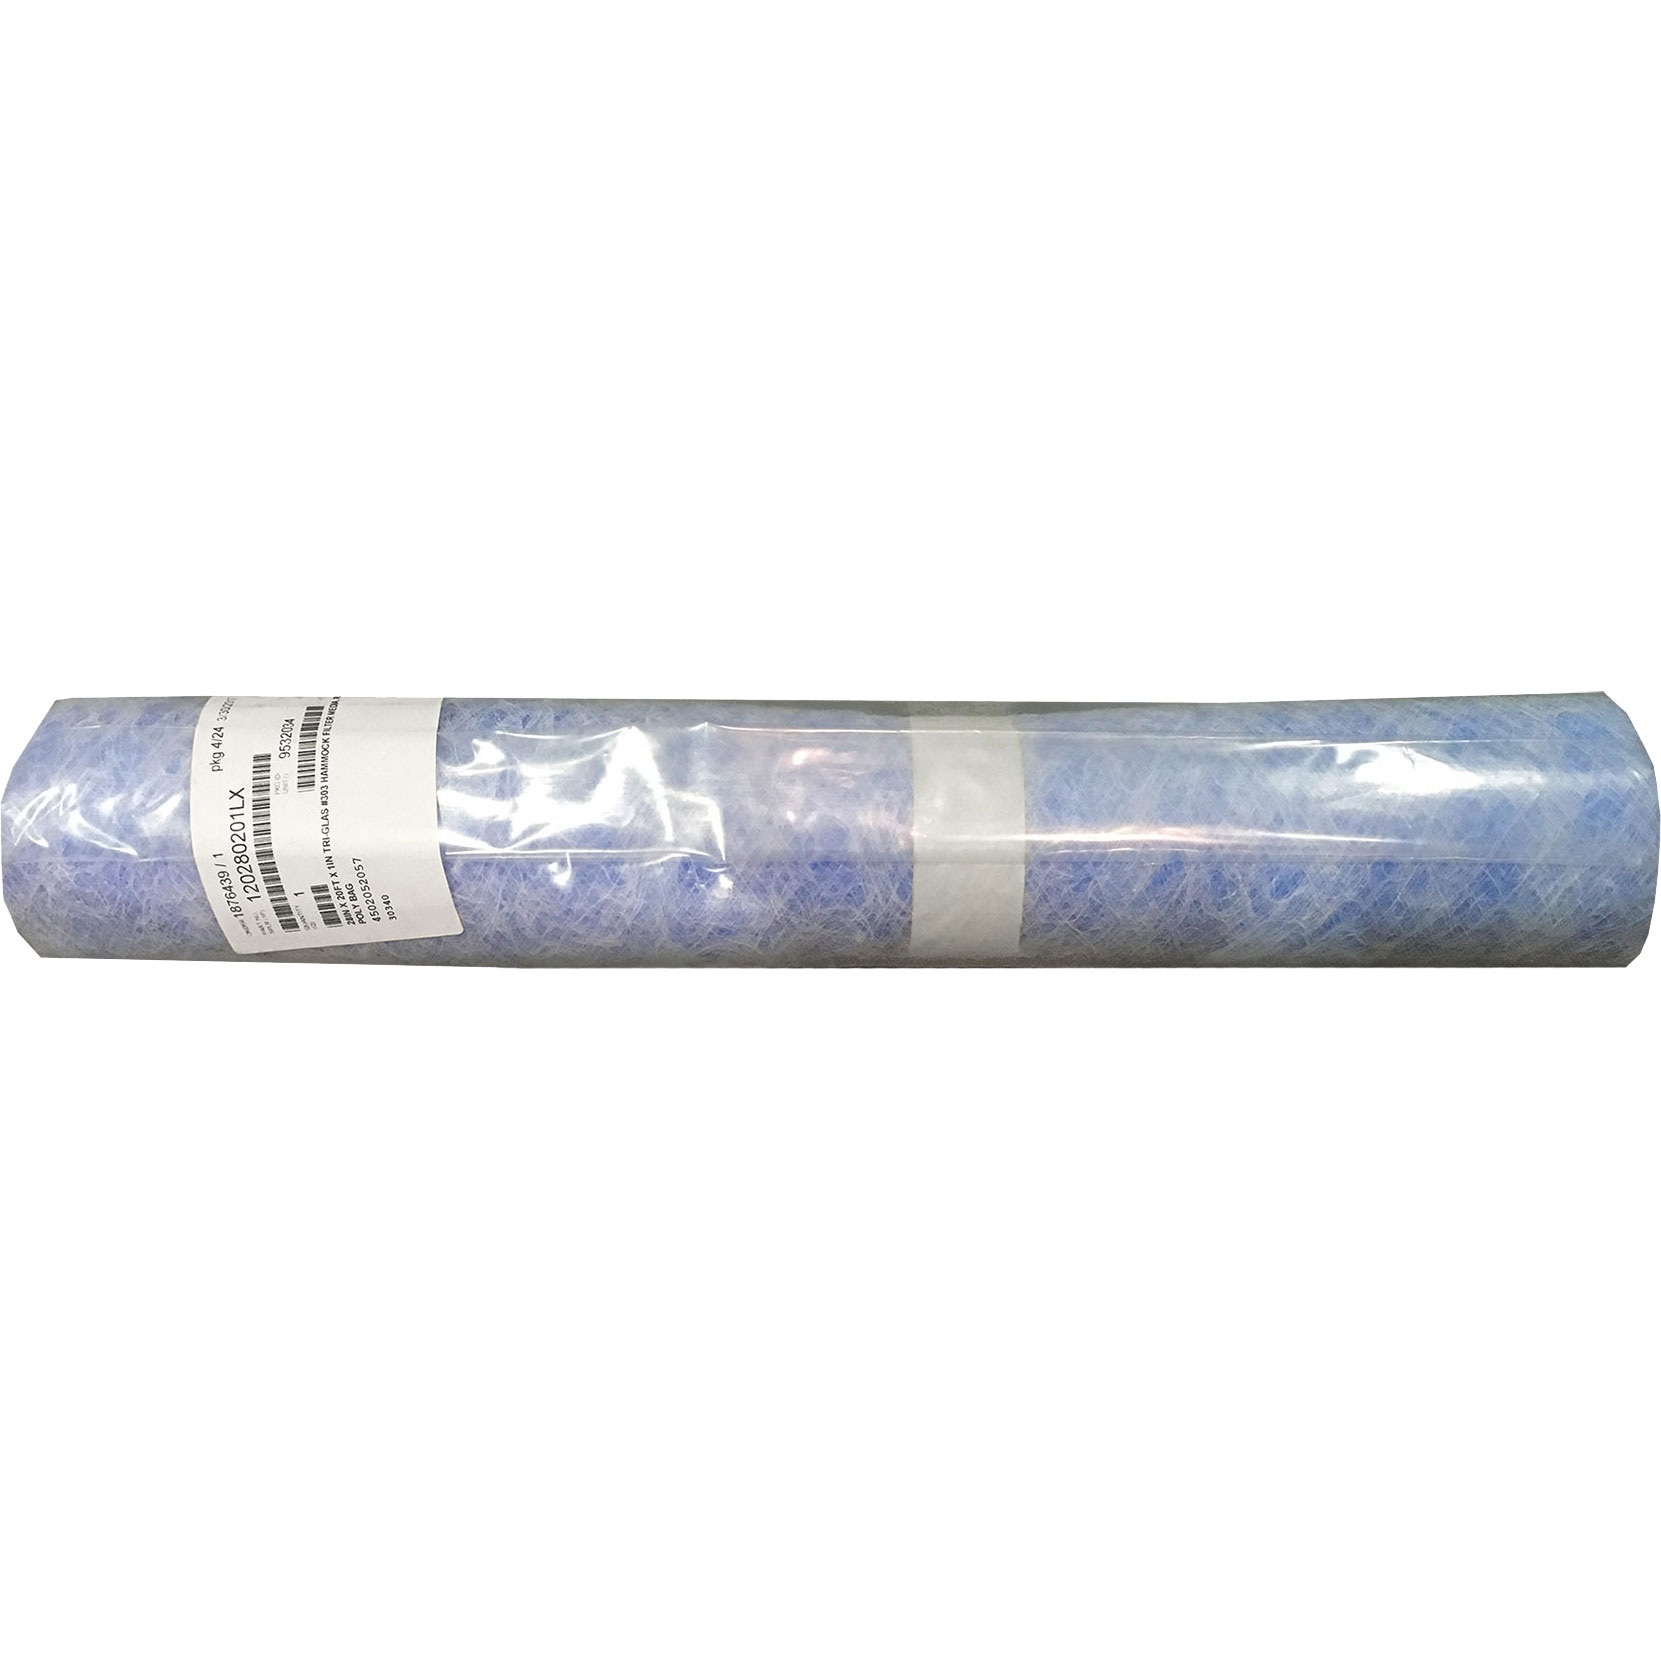 American Air Filter AMER-glas Hammock Filter Material 30 x 240 x